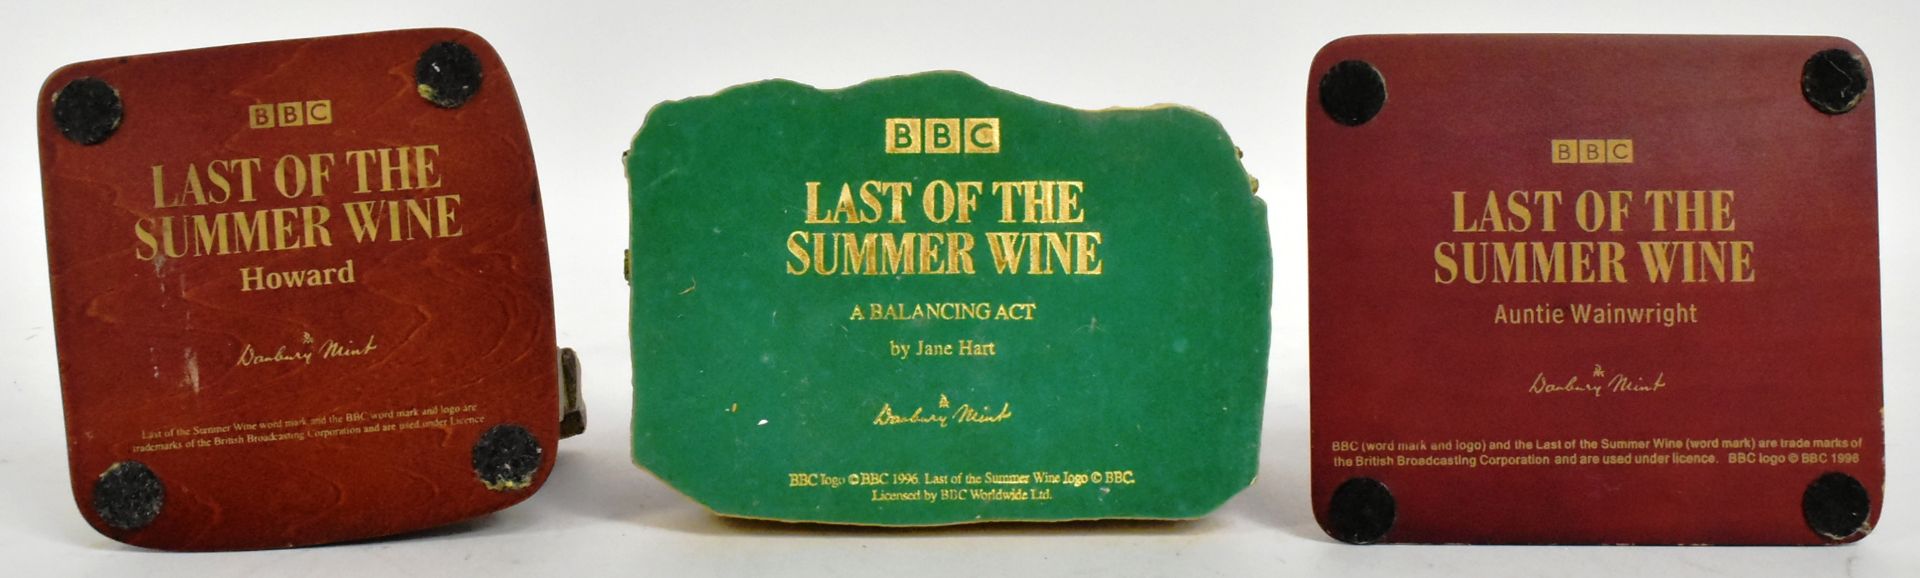 LAST OF THE SUMMER WINE (BBC SITCOM) - DANBURY MINT STATUES - Image 6 of 6